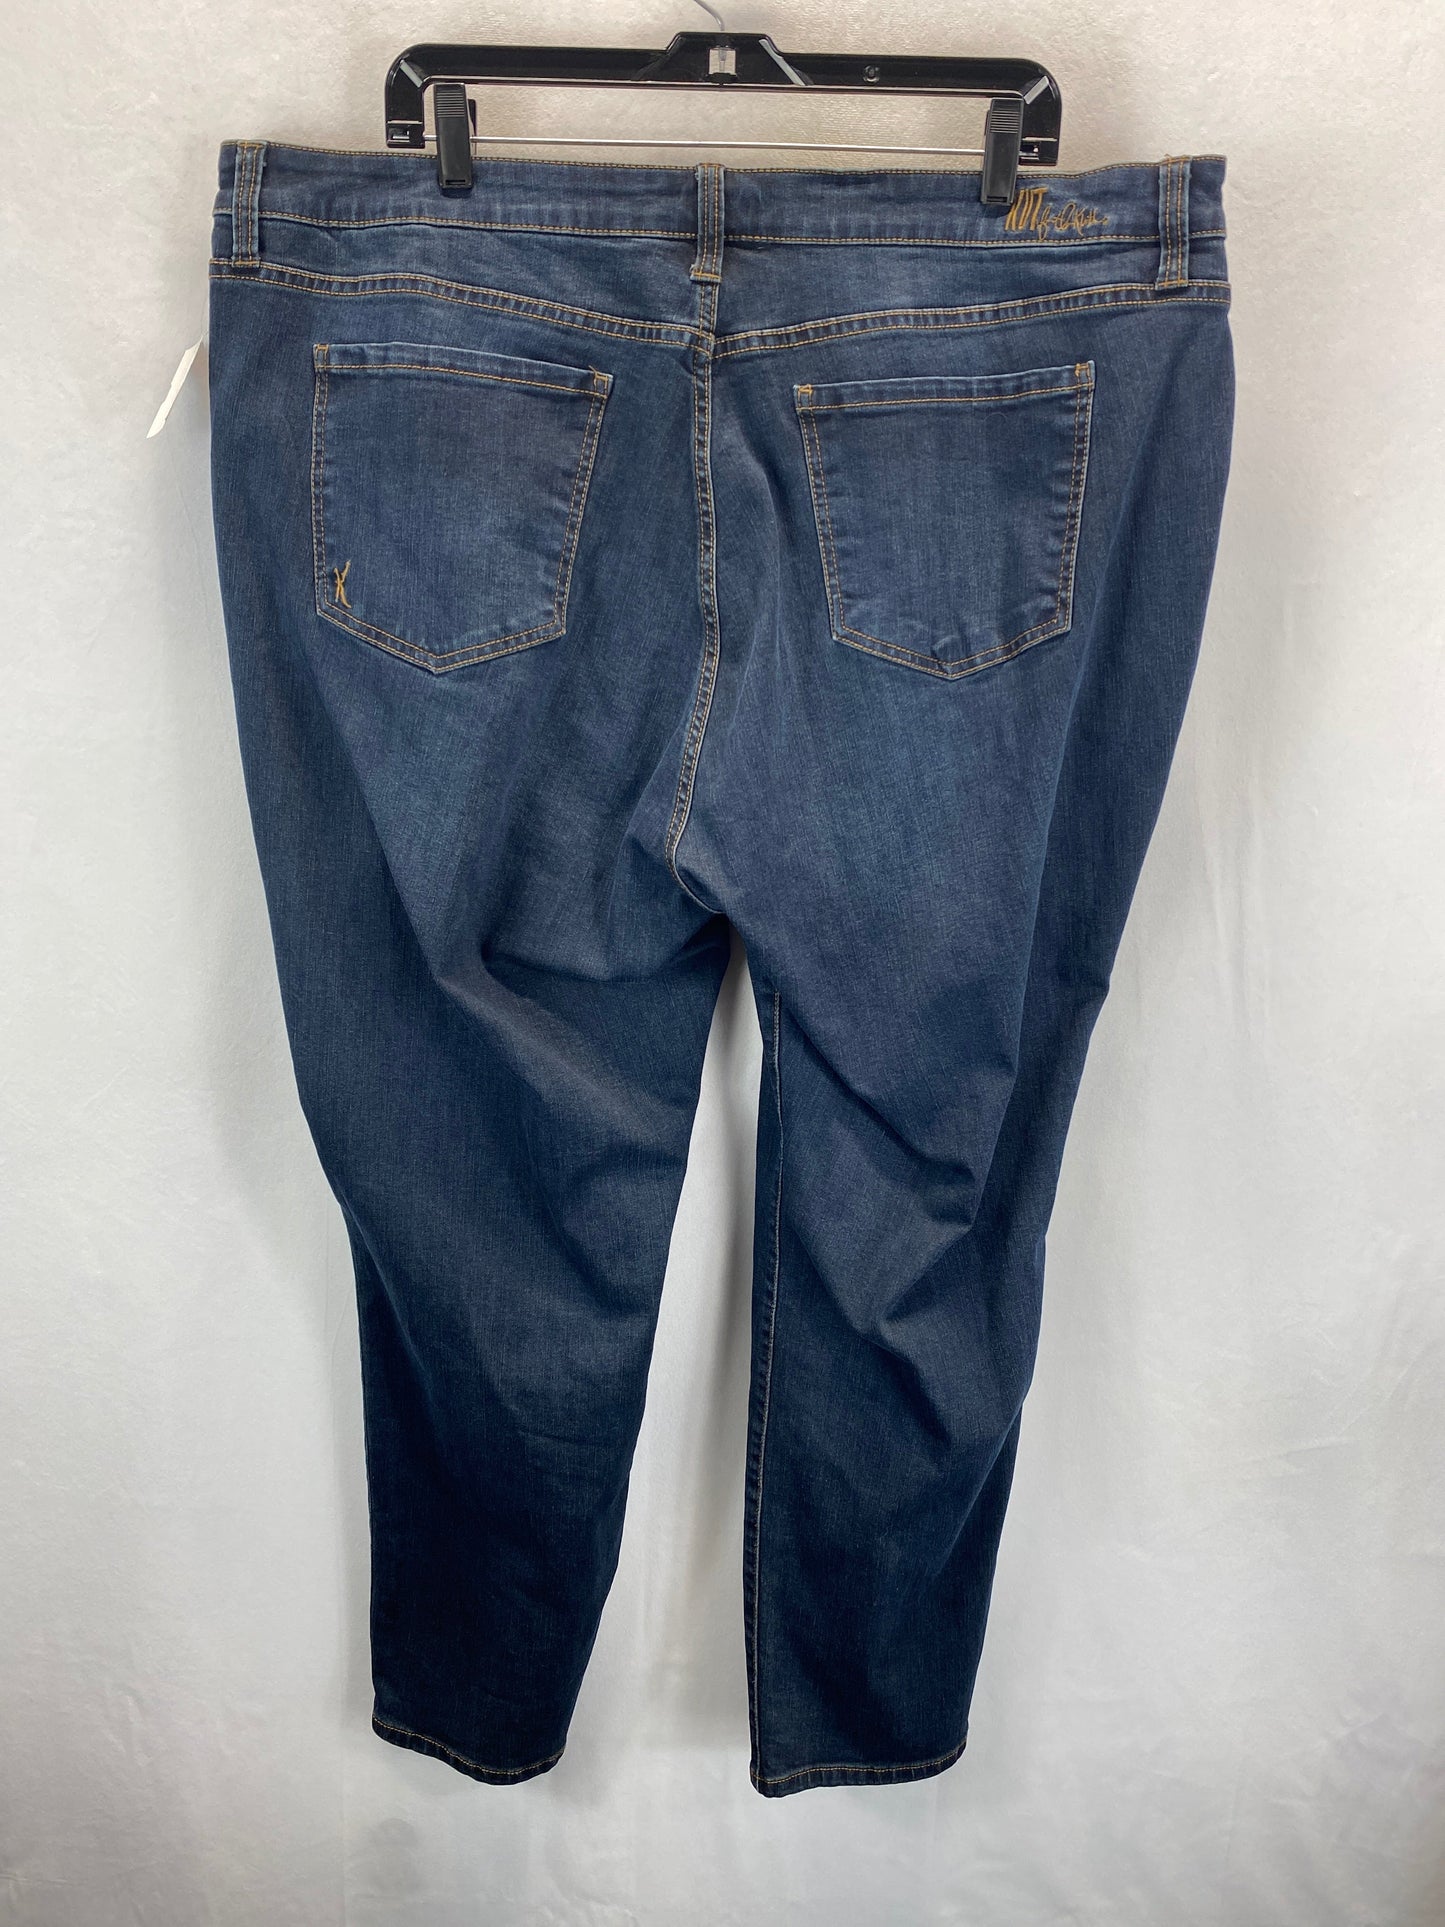 Blue Denim Jeans Straight Kut, Size 20w